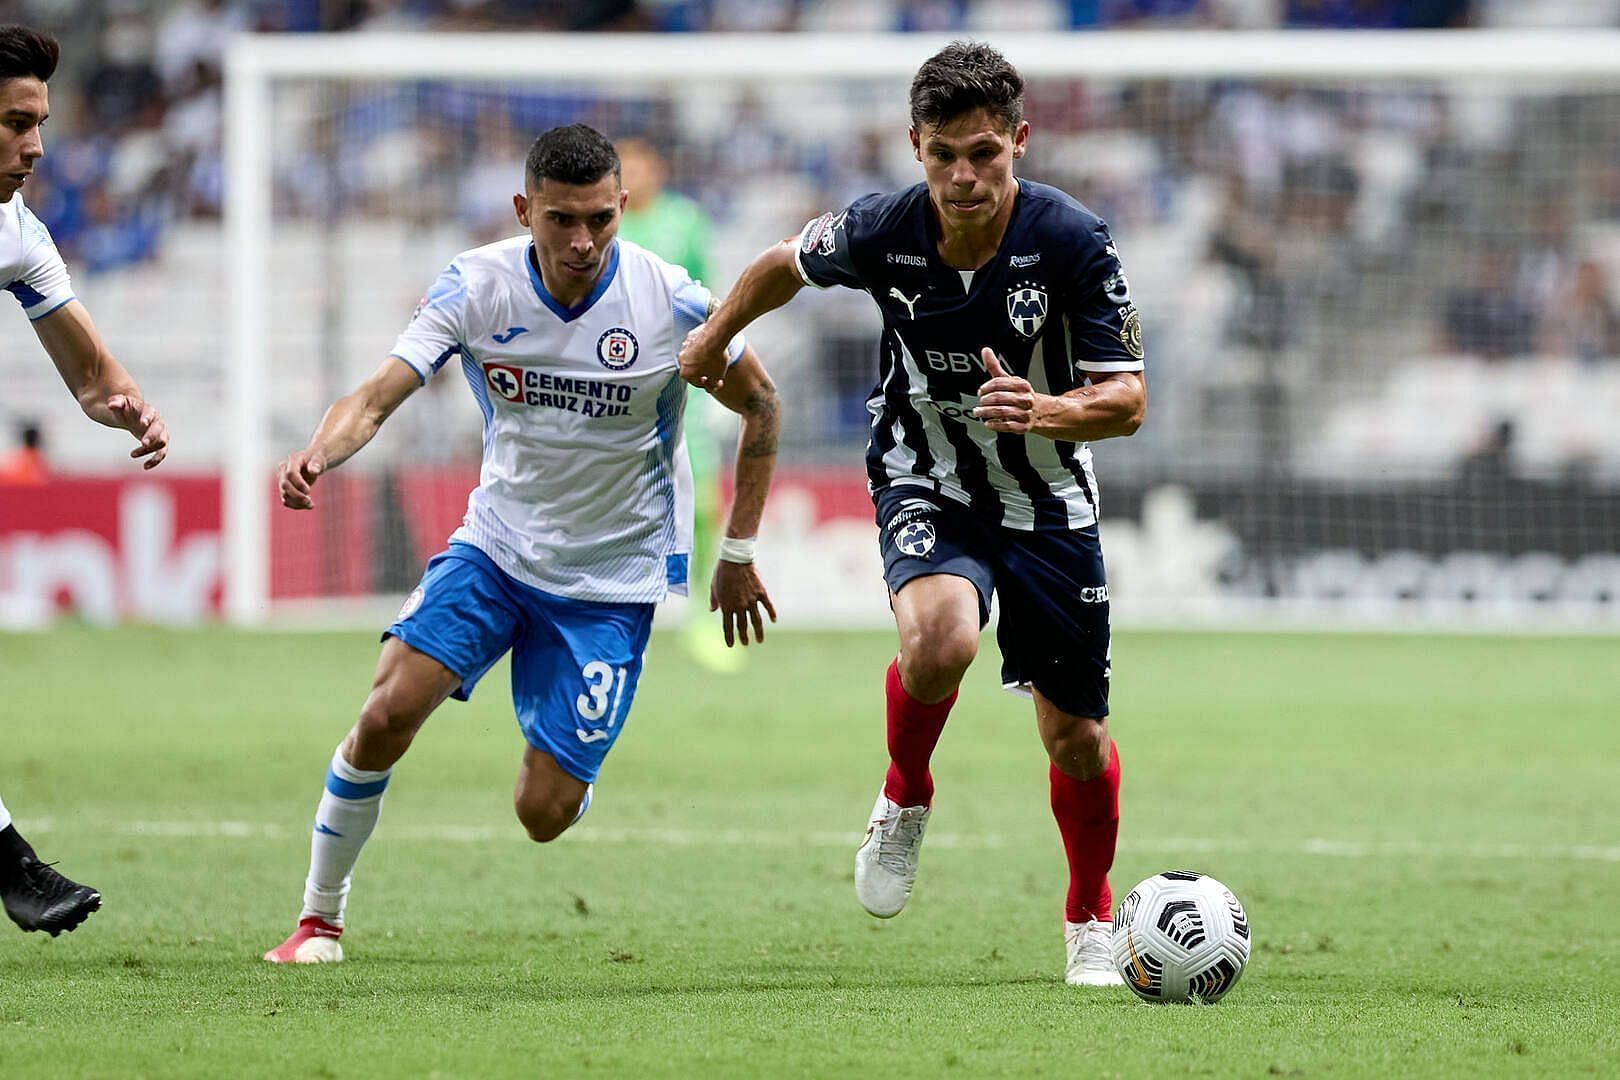 Monterrey host Cruz Azul in their Liga MX fixture on Saturday night